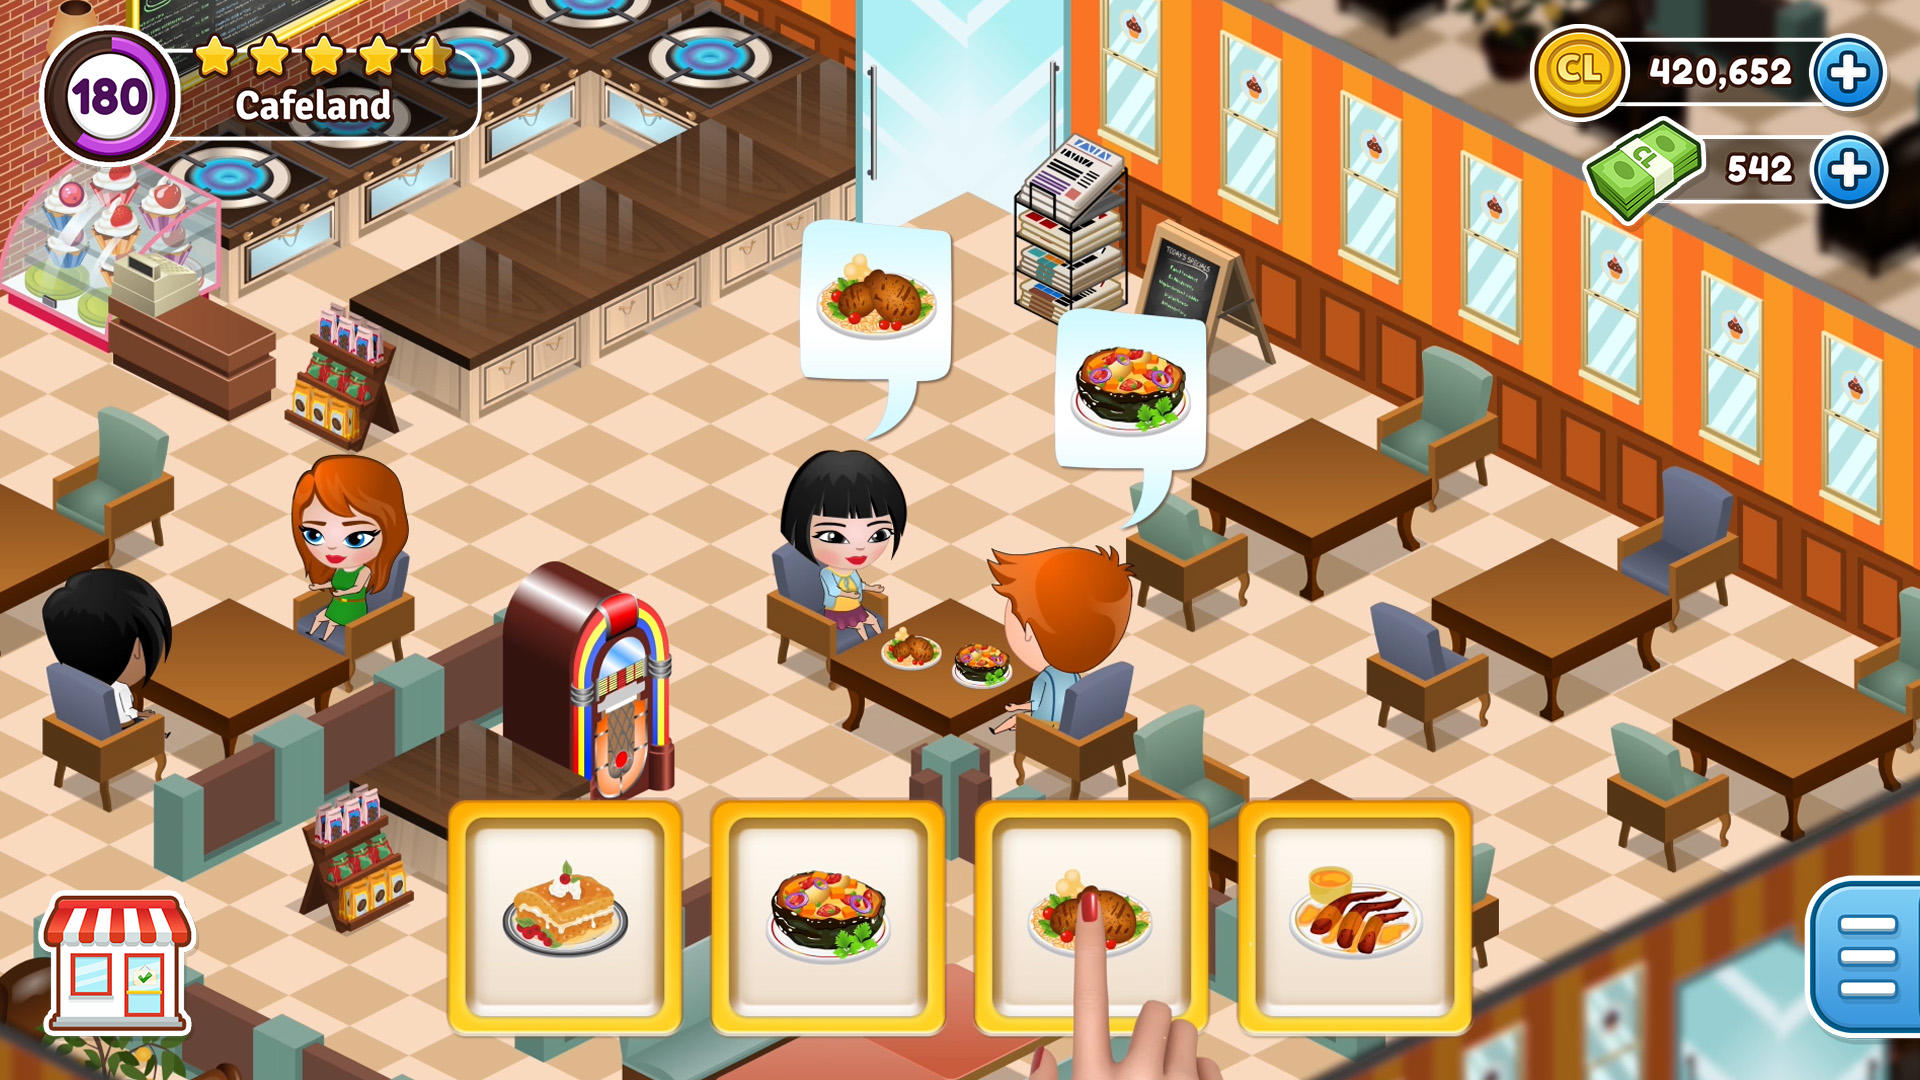 Screenshot 1 of Cafeland - Pagluluto sa Restaurant 2.22.5